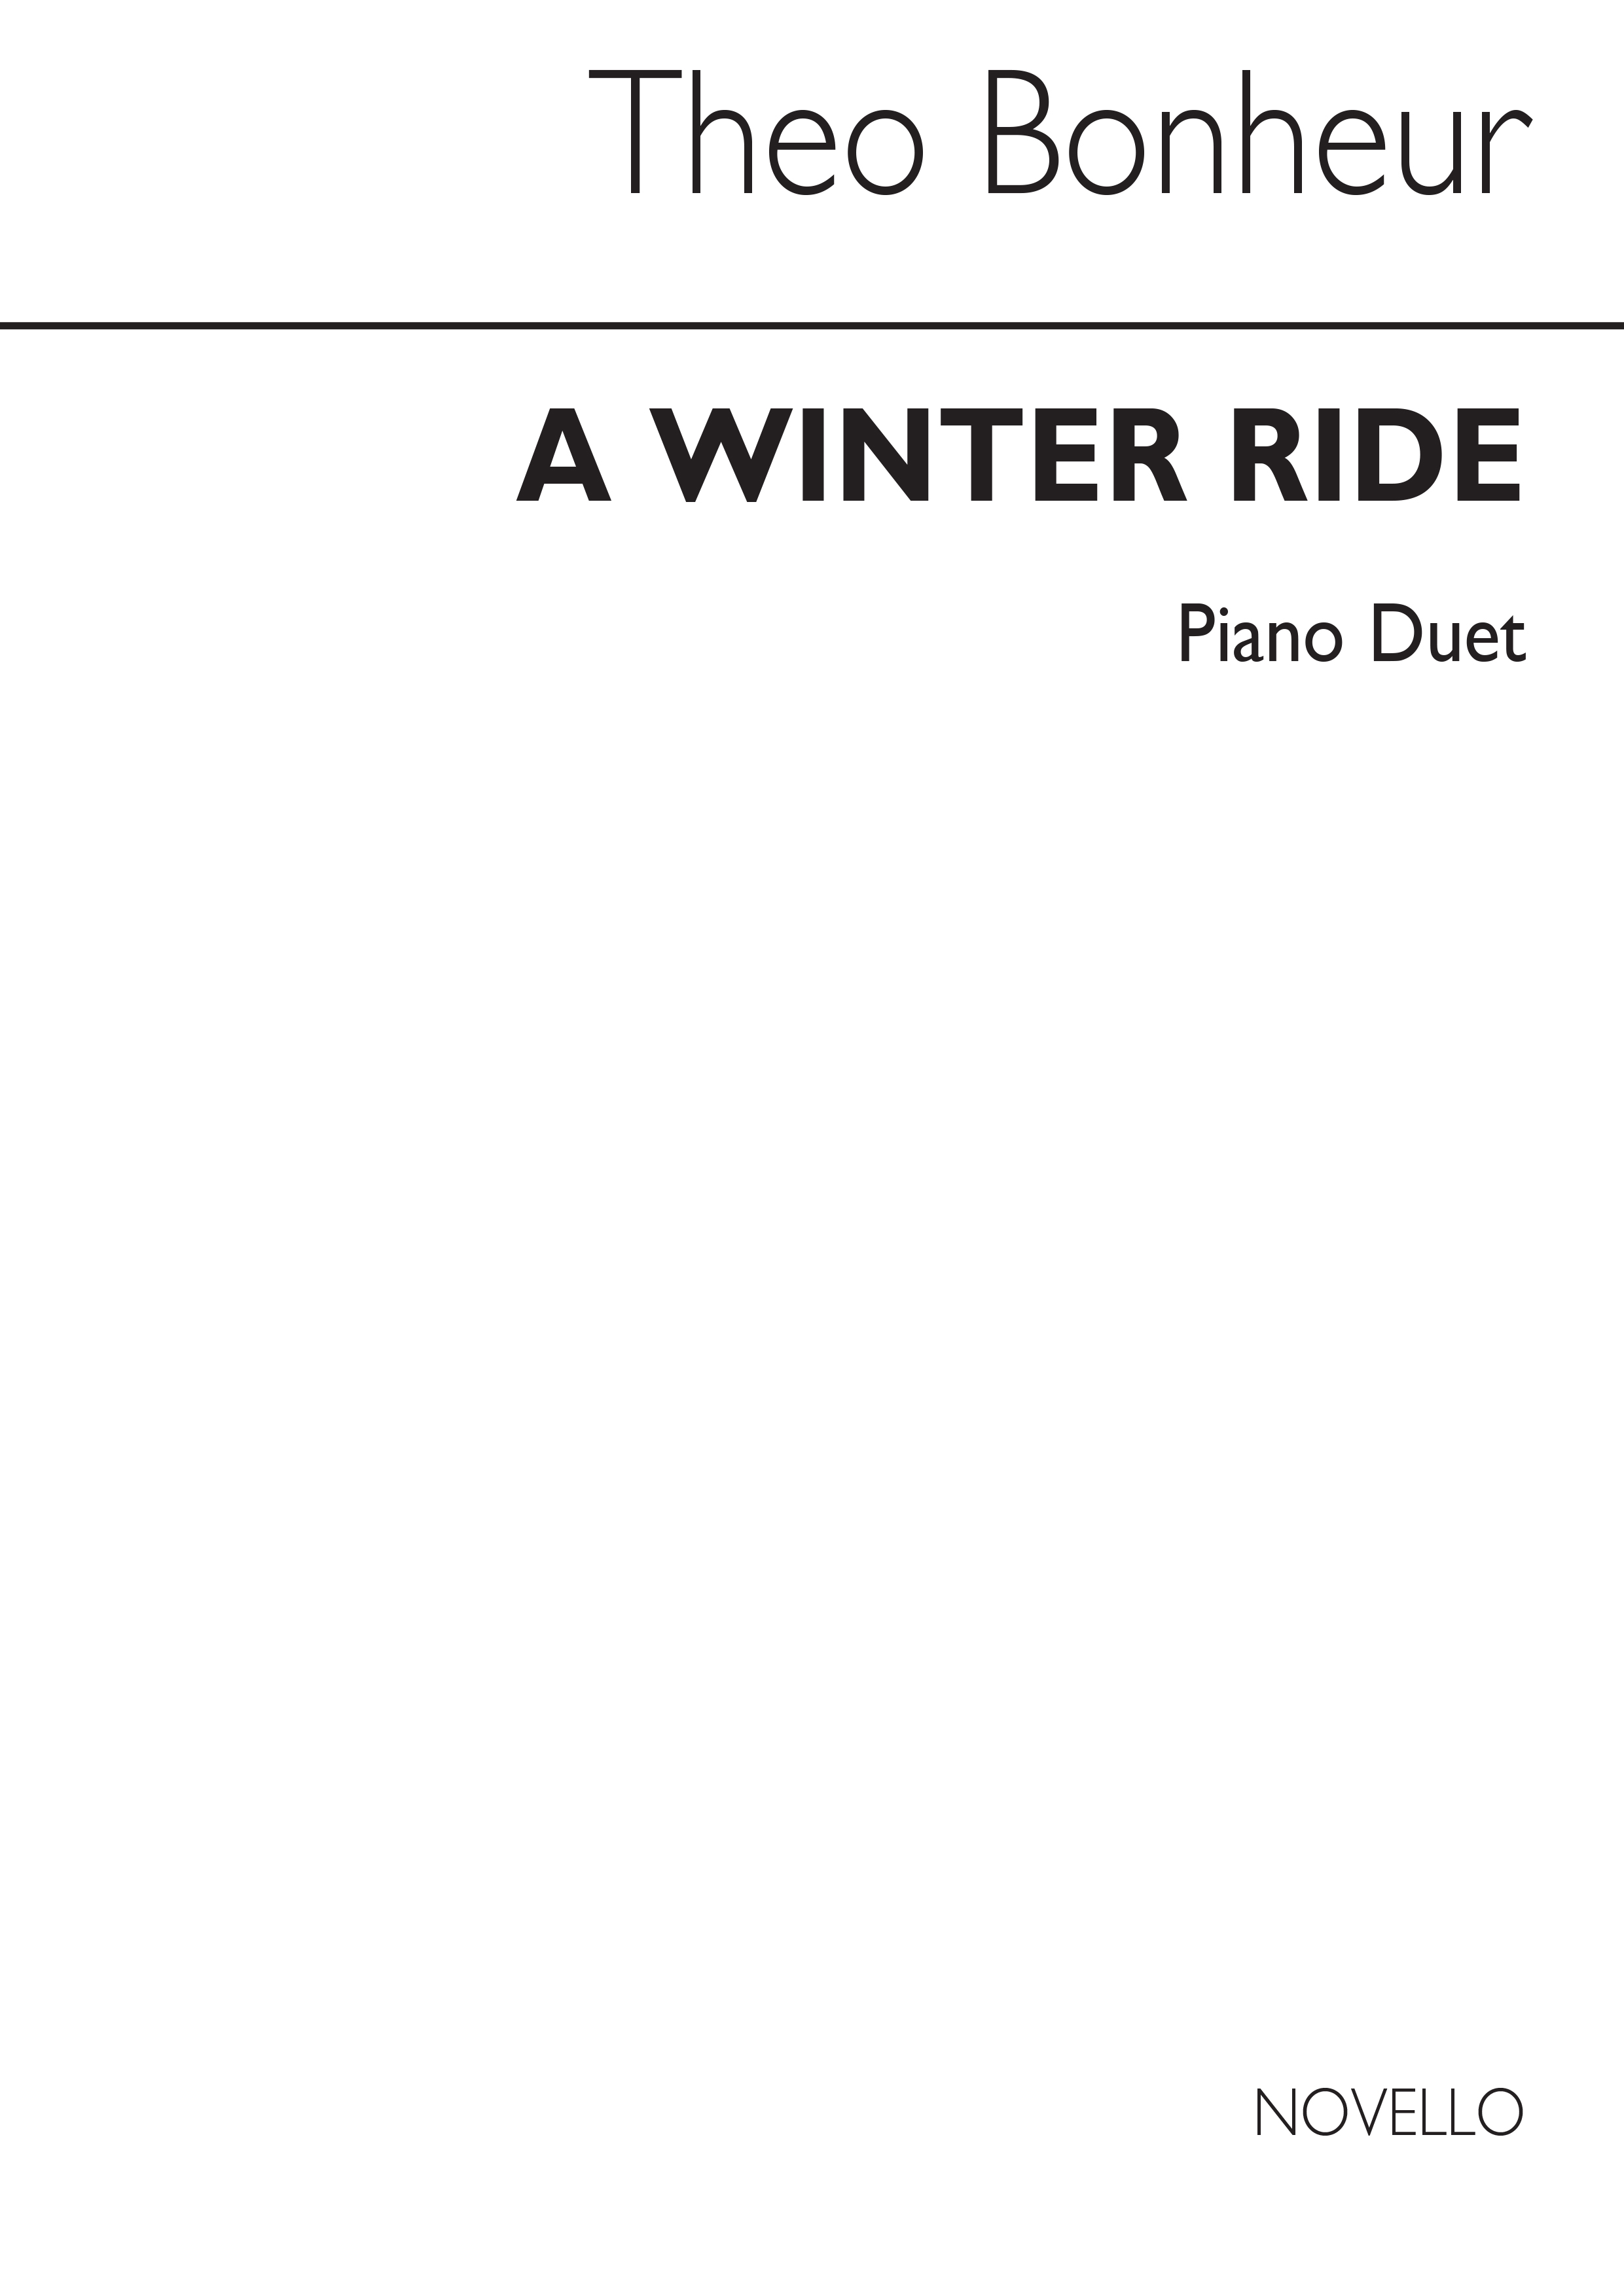 Bonheur, T A Winter Ride Piano Duet